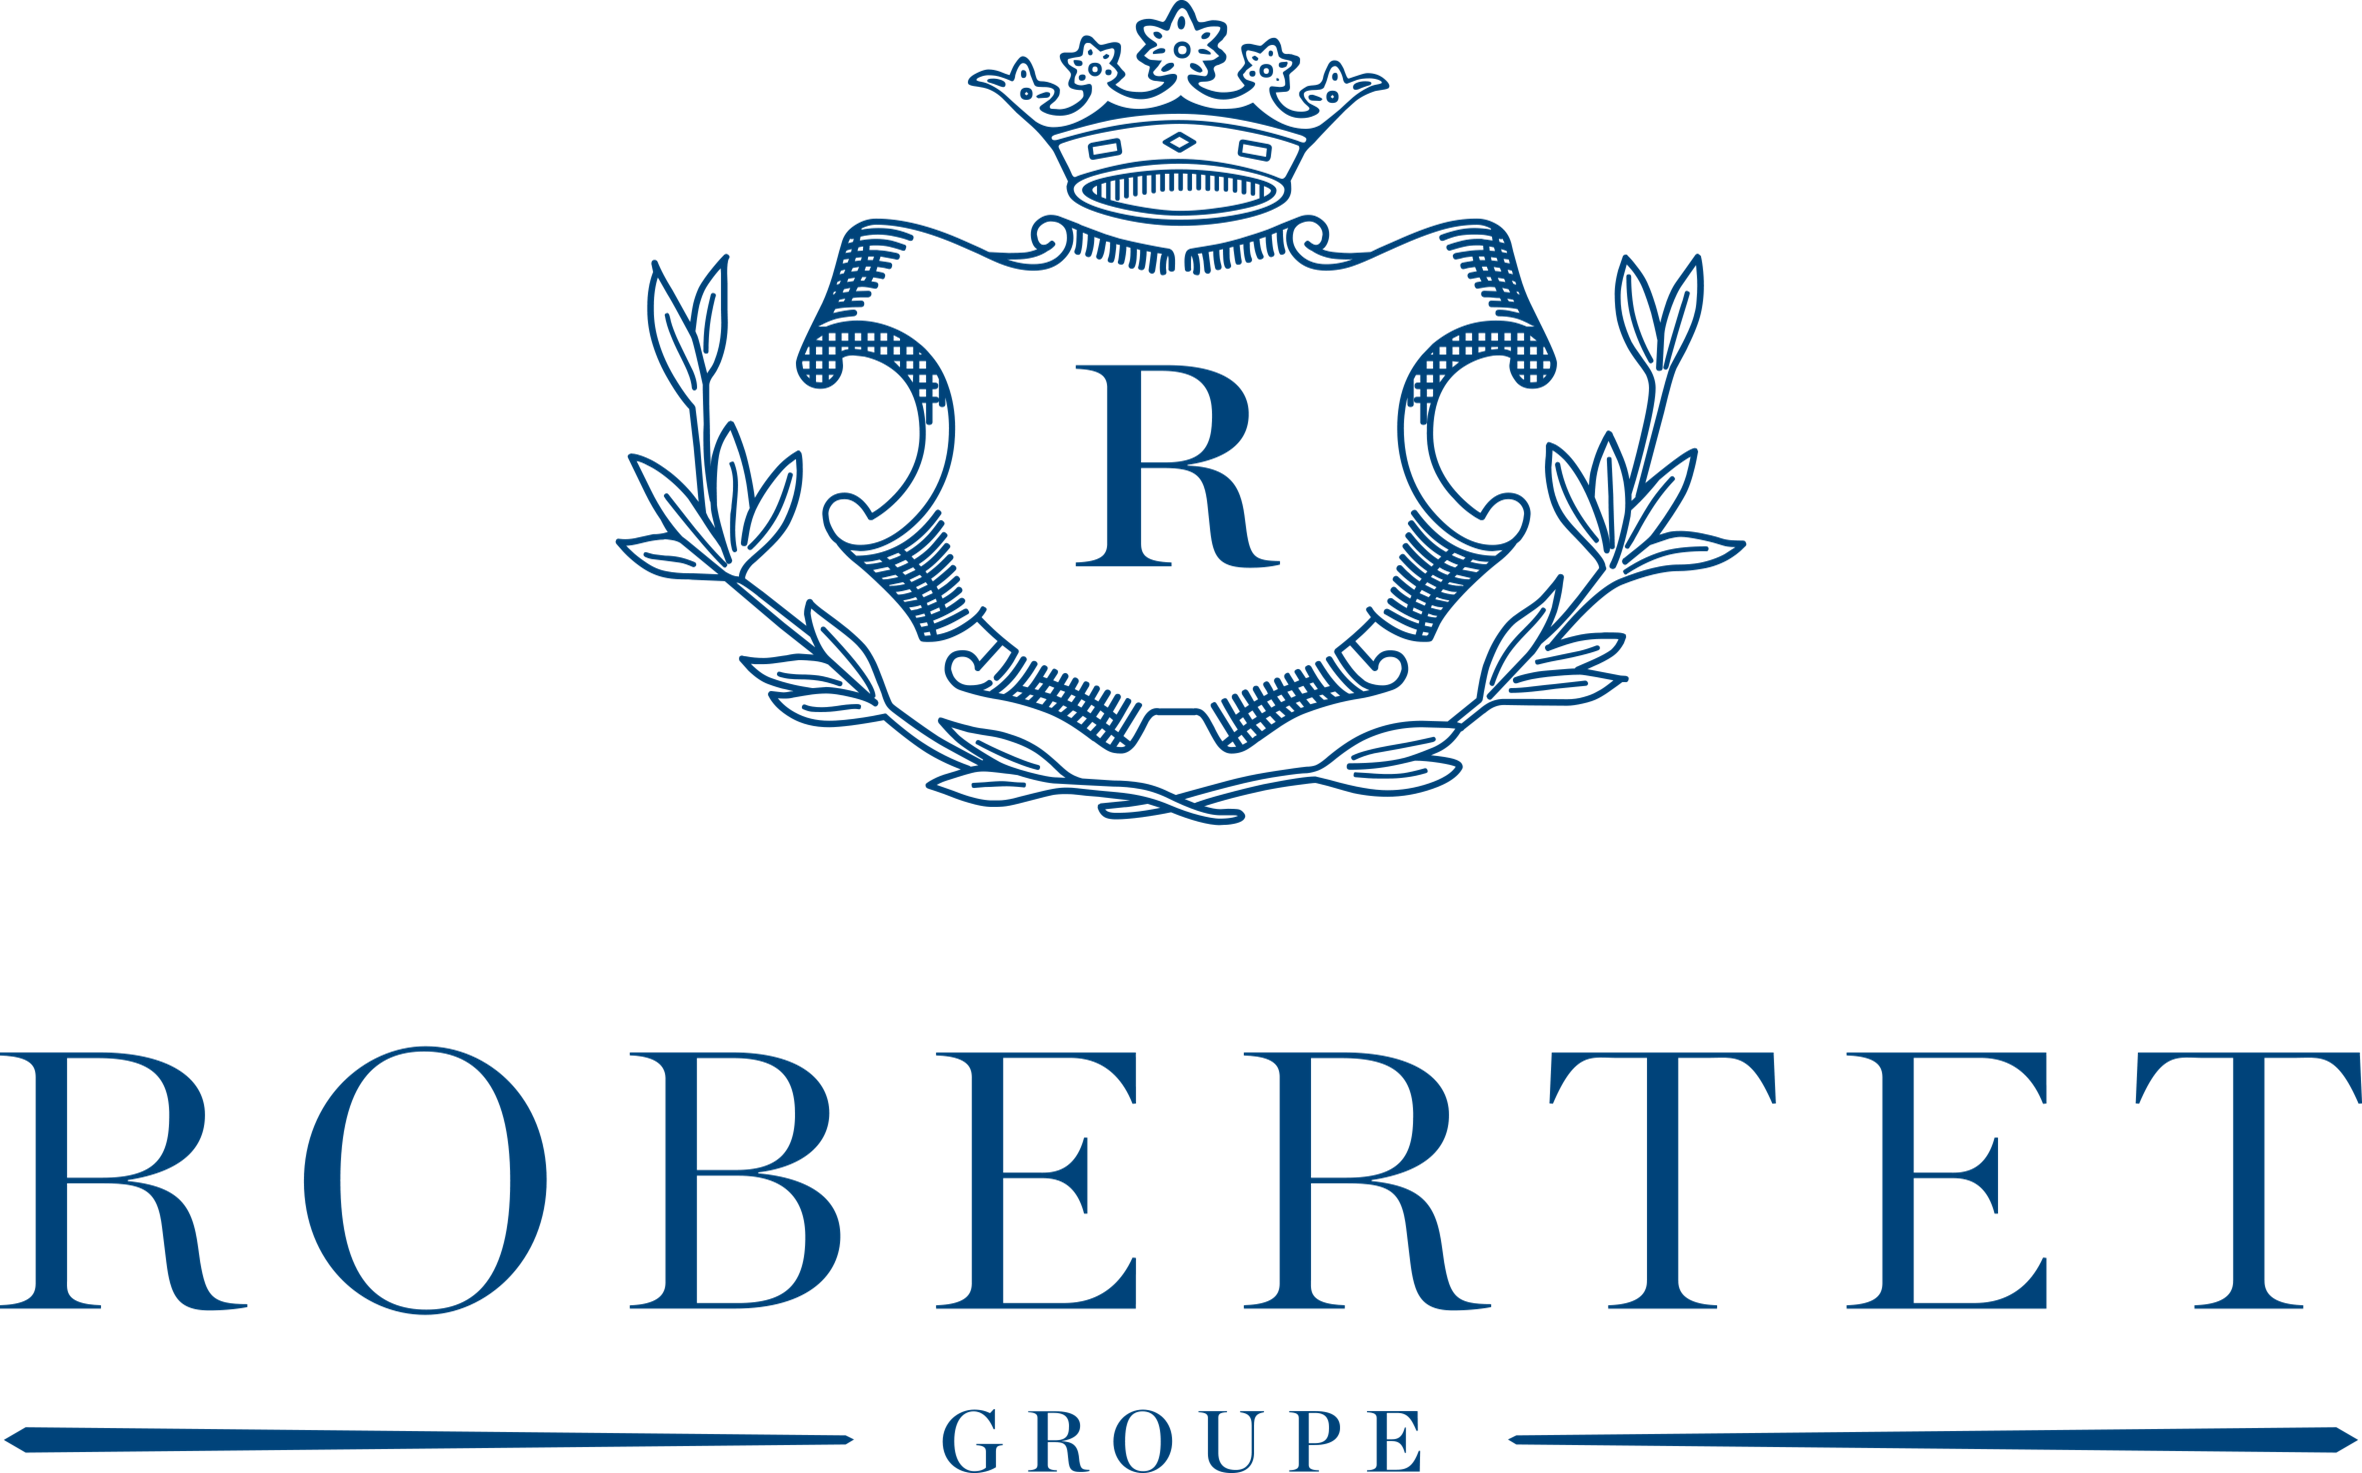 Robertet Groupe Logo